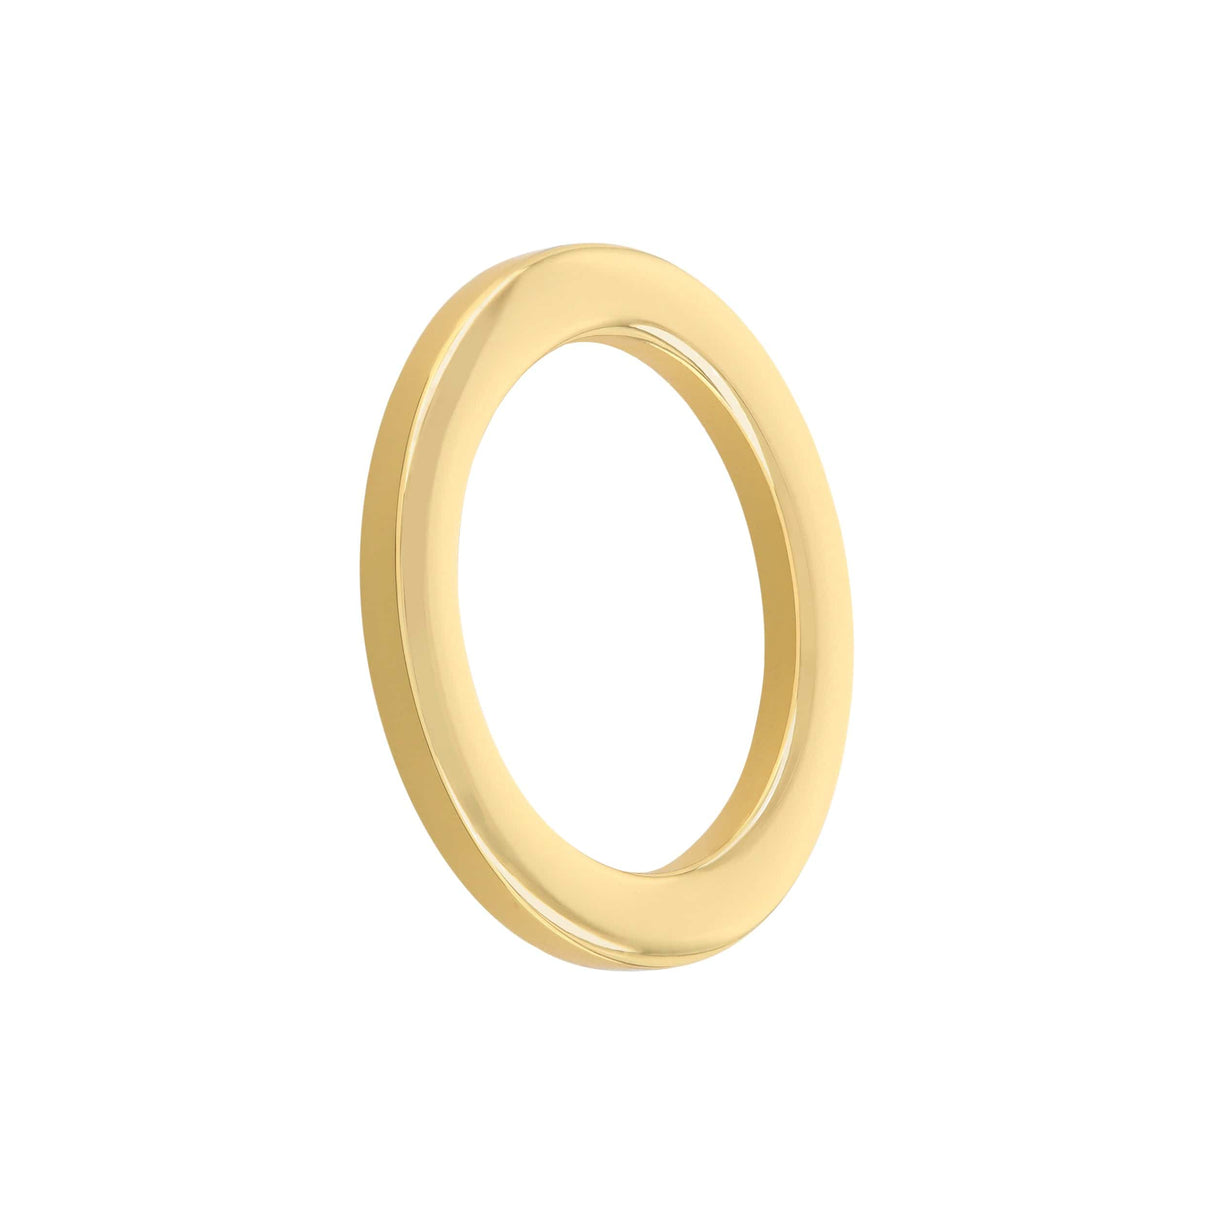 Ohio Travel Bag Rings & Slides 1" Shiny Gold, Cast Flat Round Ring, Zinc Alloy, #P-2552-GOLD P-2552-GOLD